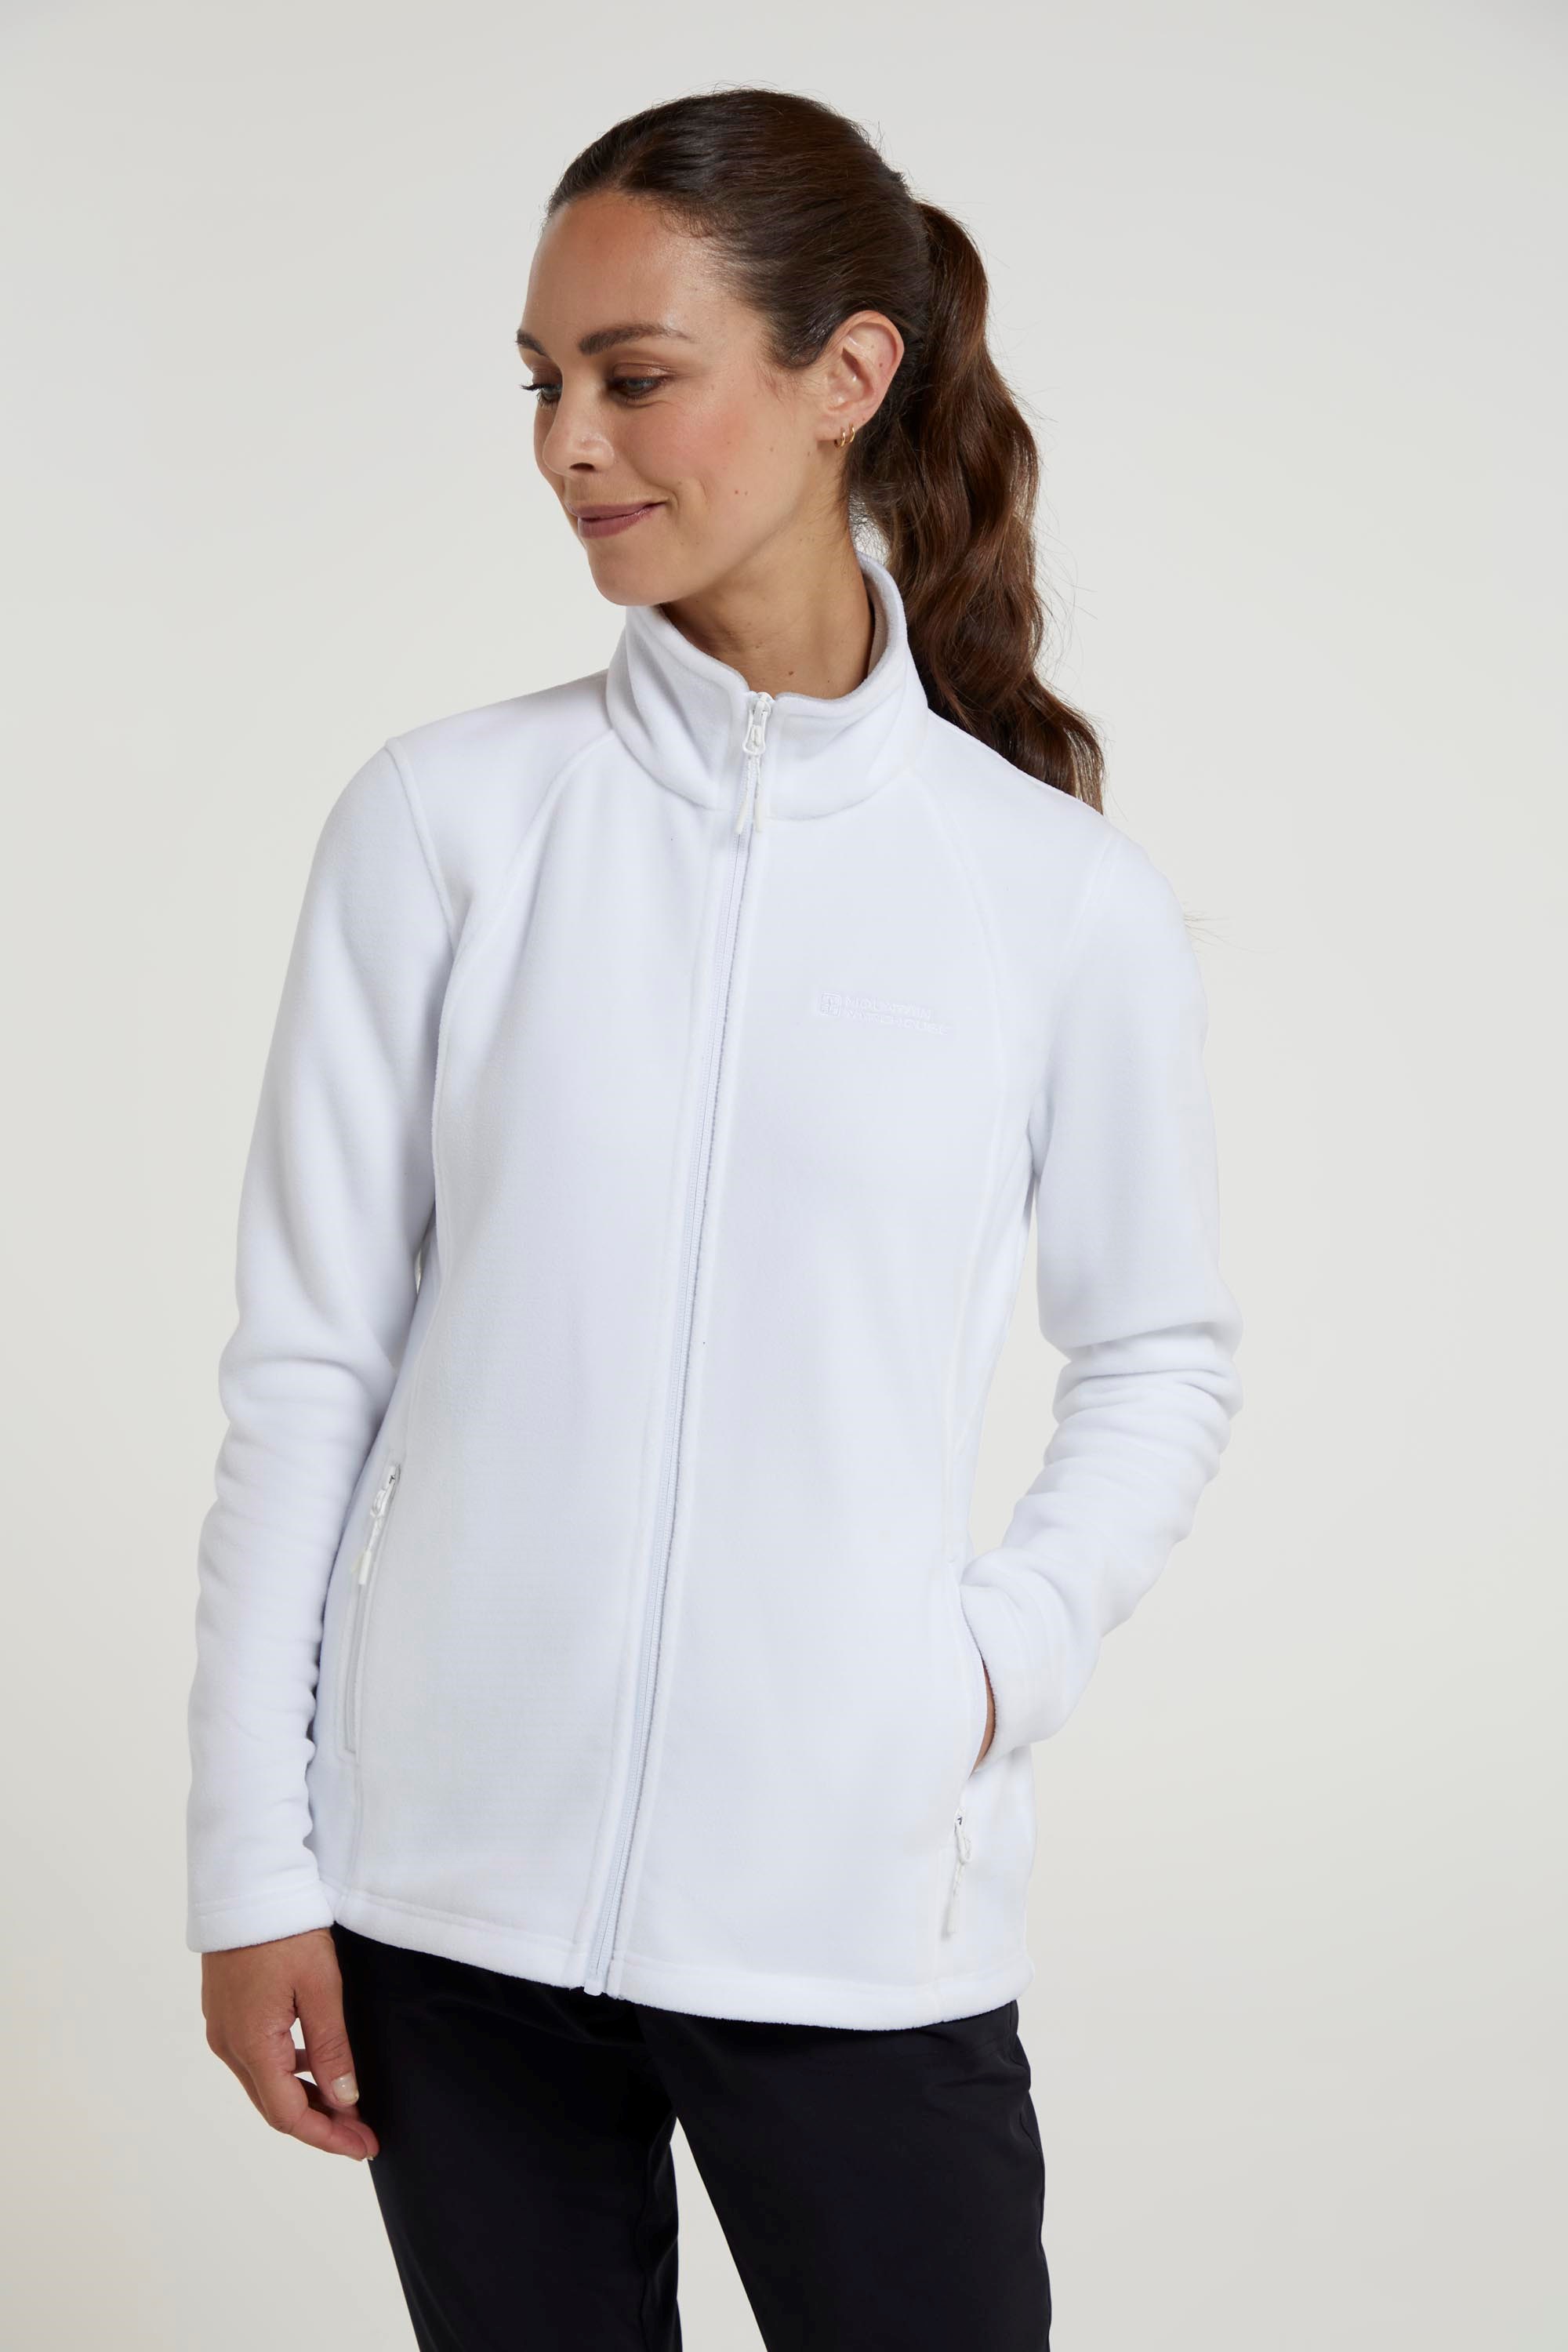 Sky Womens Full-Zip Fleece Jacket - White